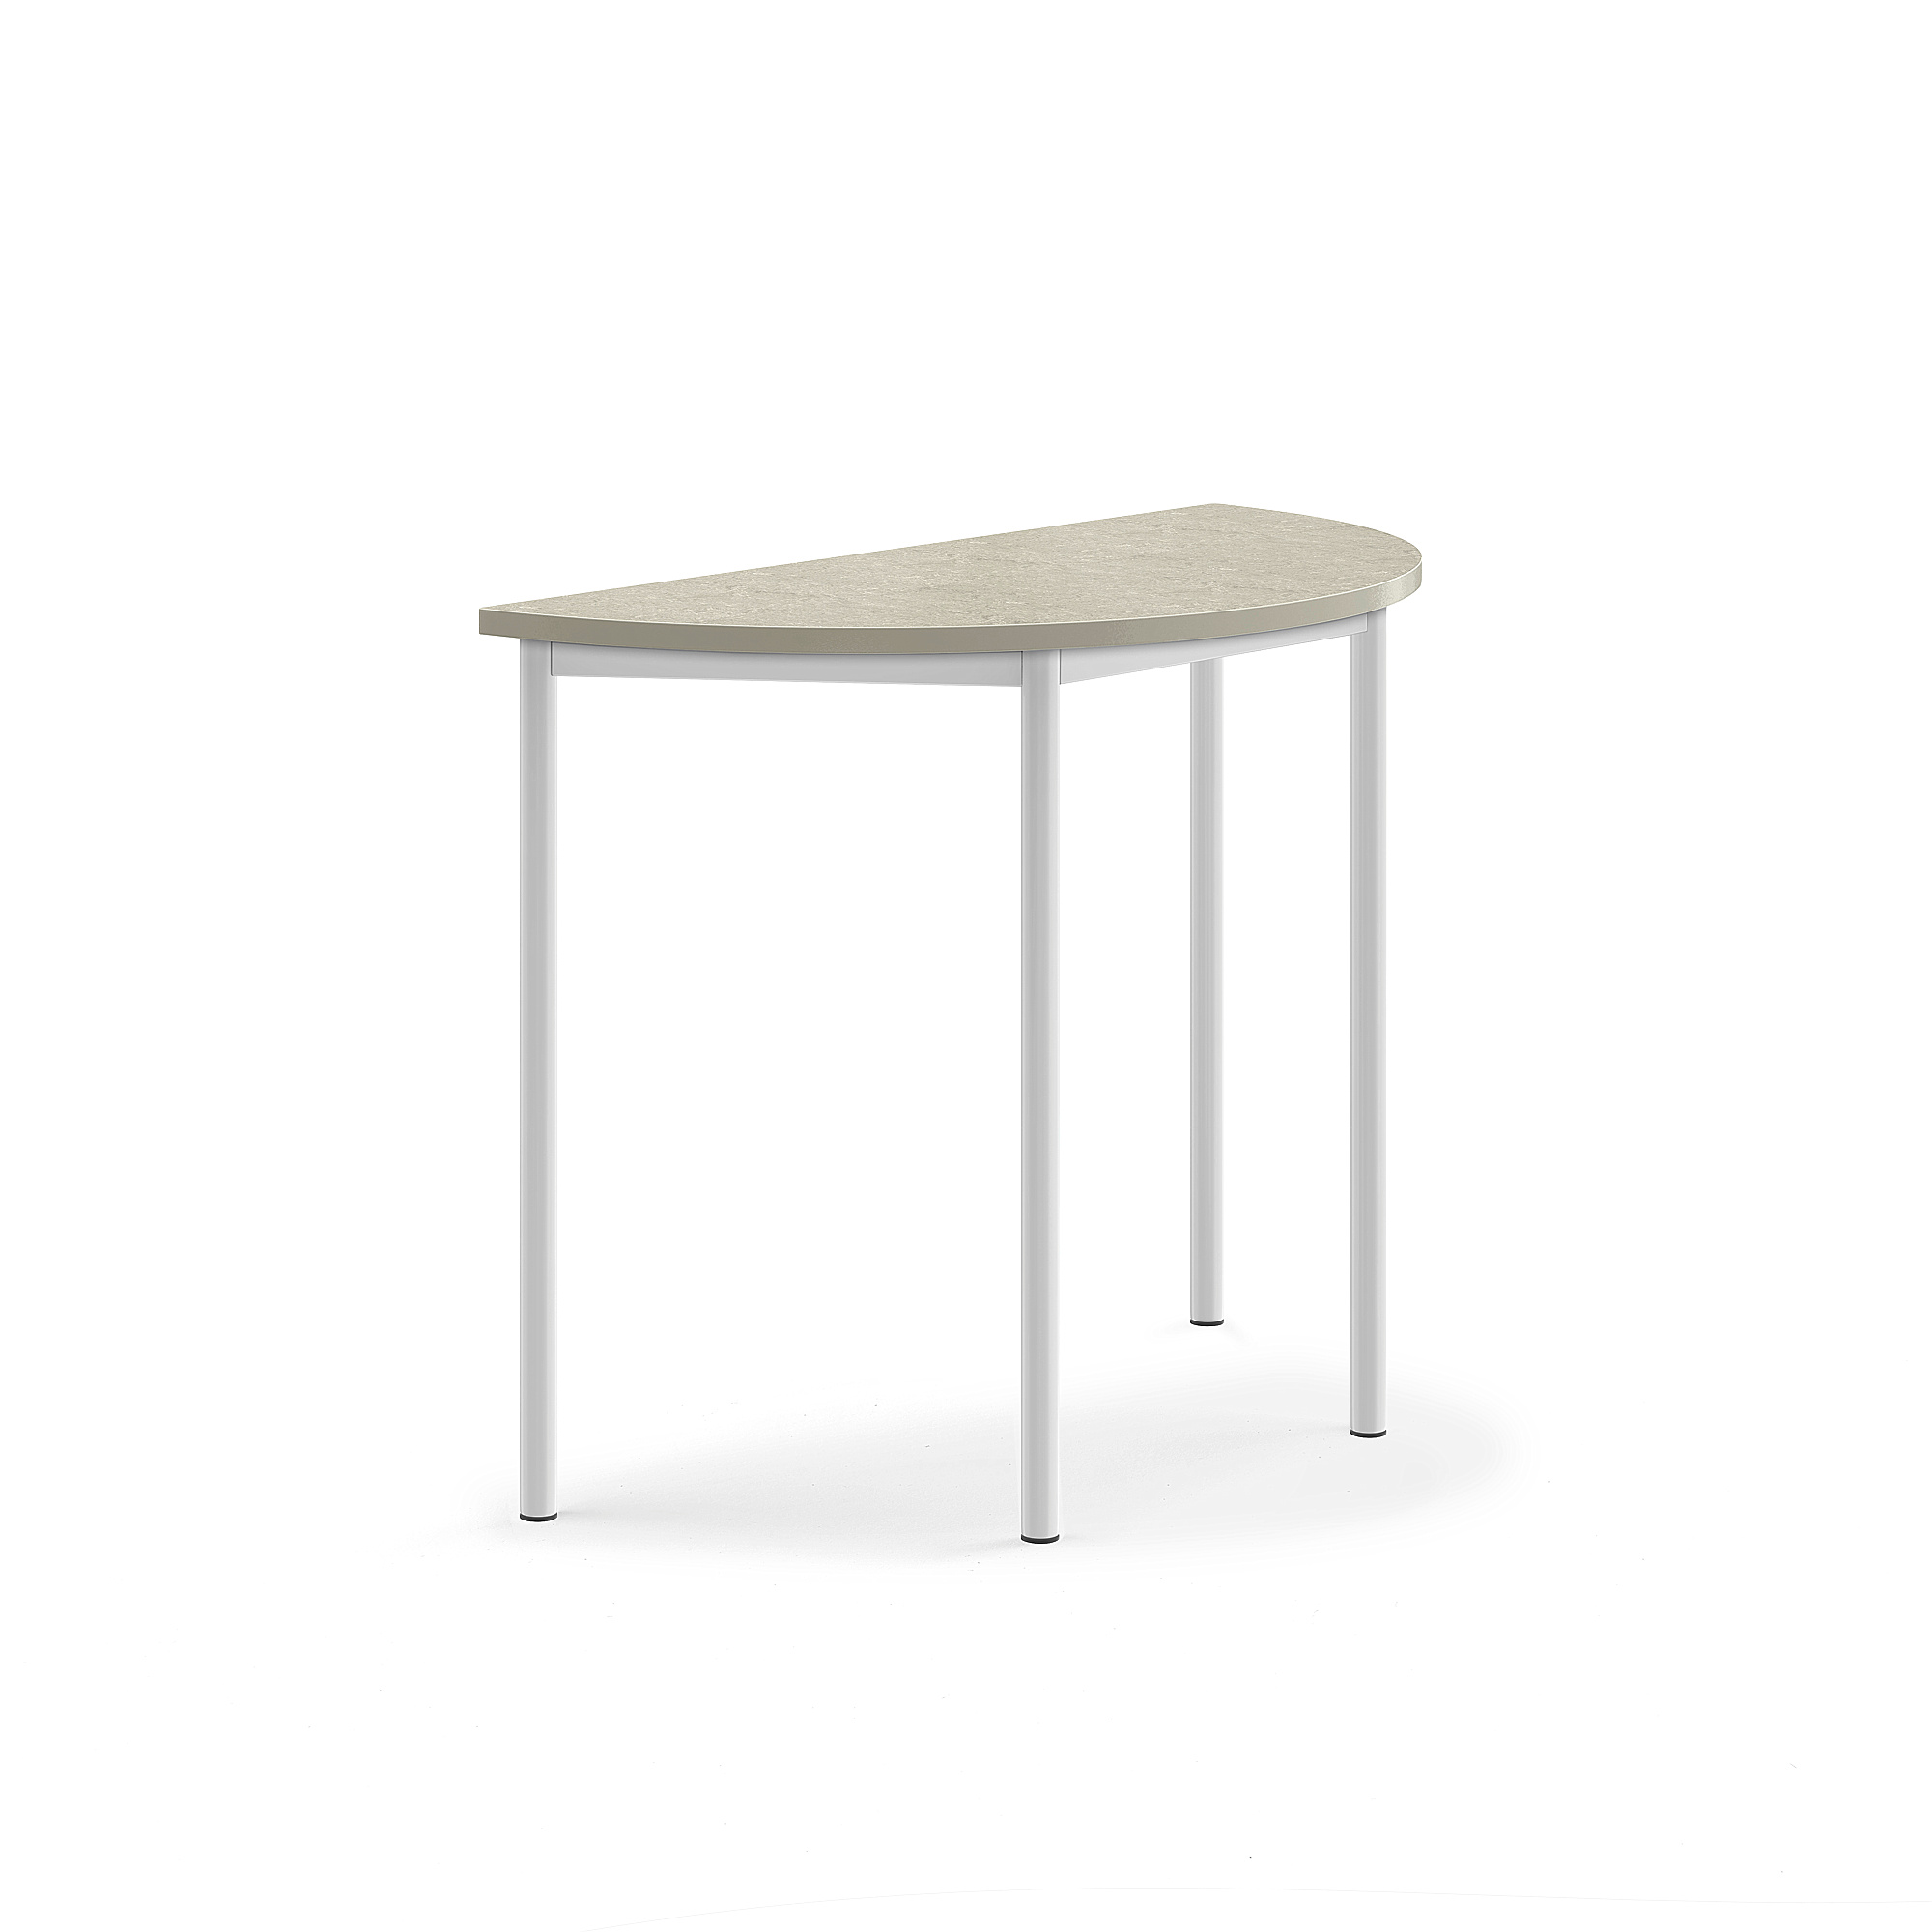 Stůl SONITUS, půlkruh, 1200x600x900 mm, bílé nohy, deska s linoleem, šedá